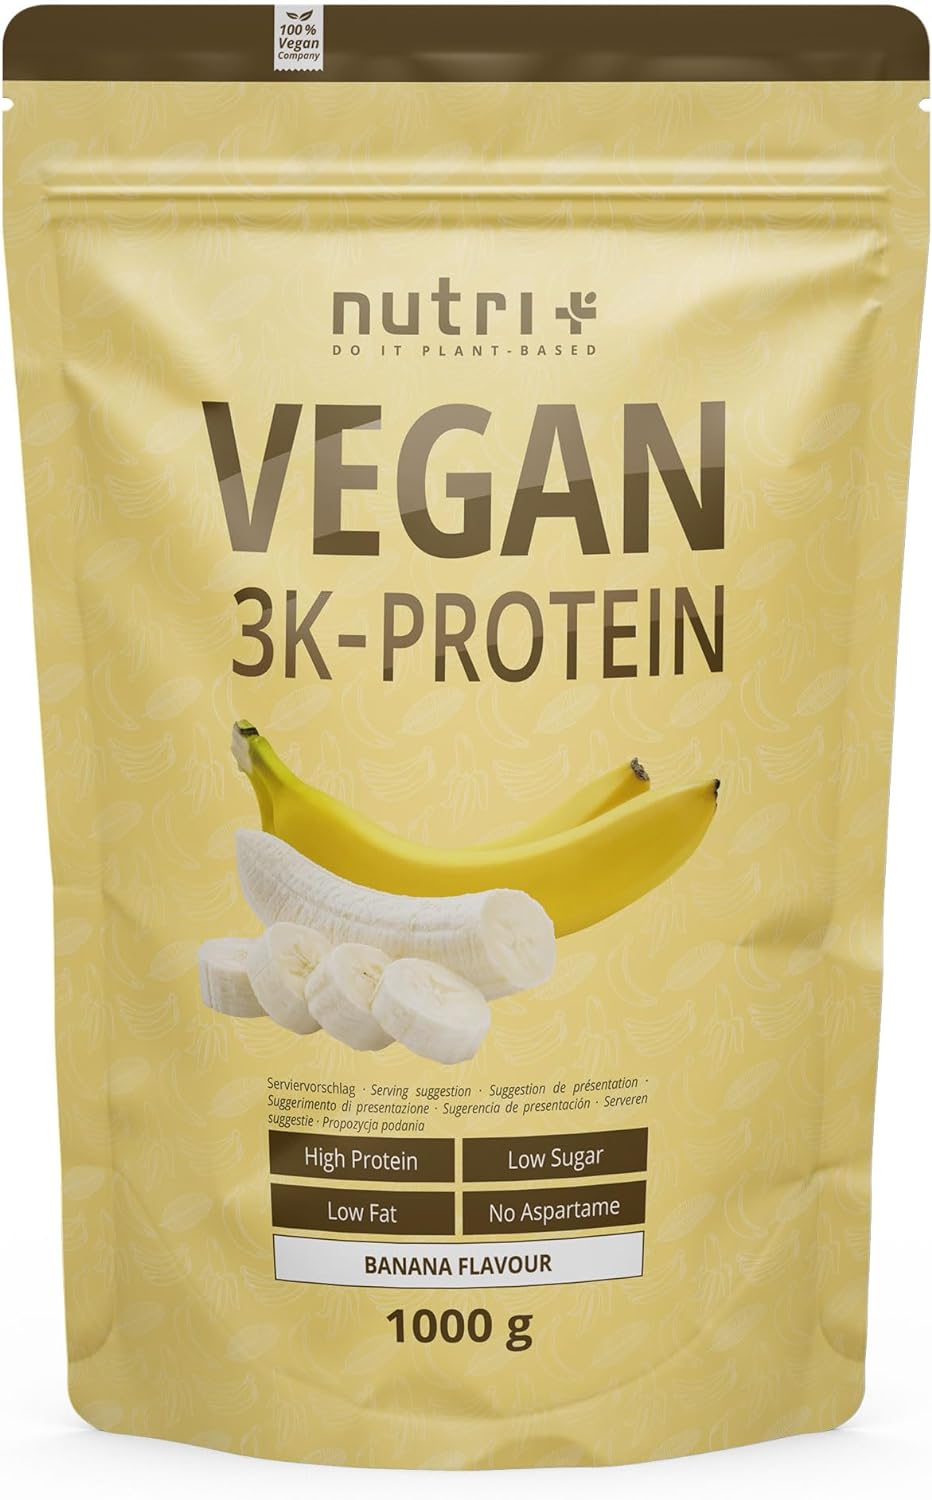 Vegan 3K Protein Nutri Plus